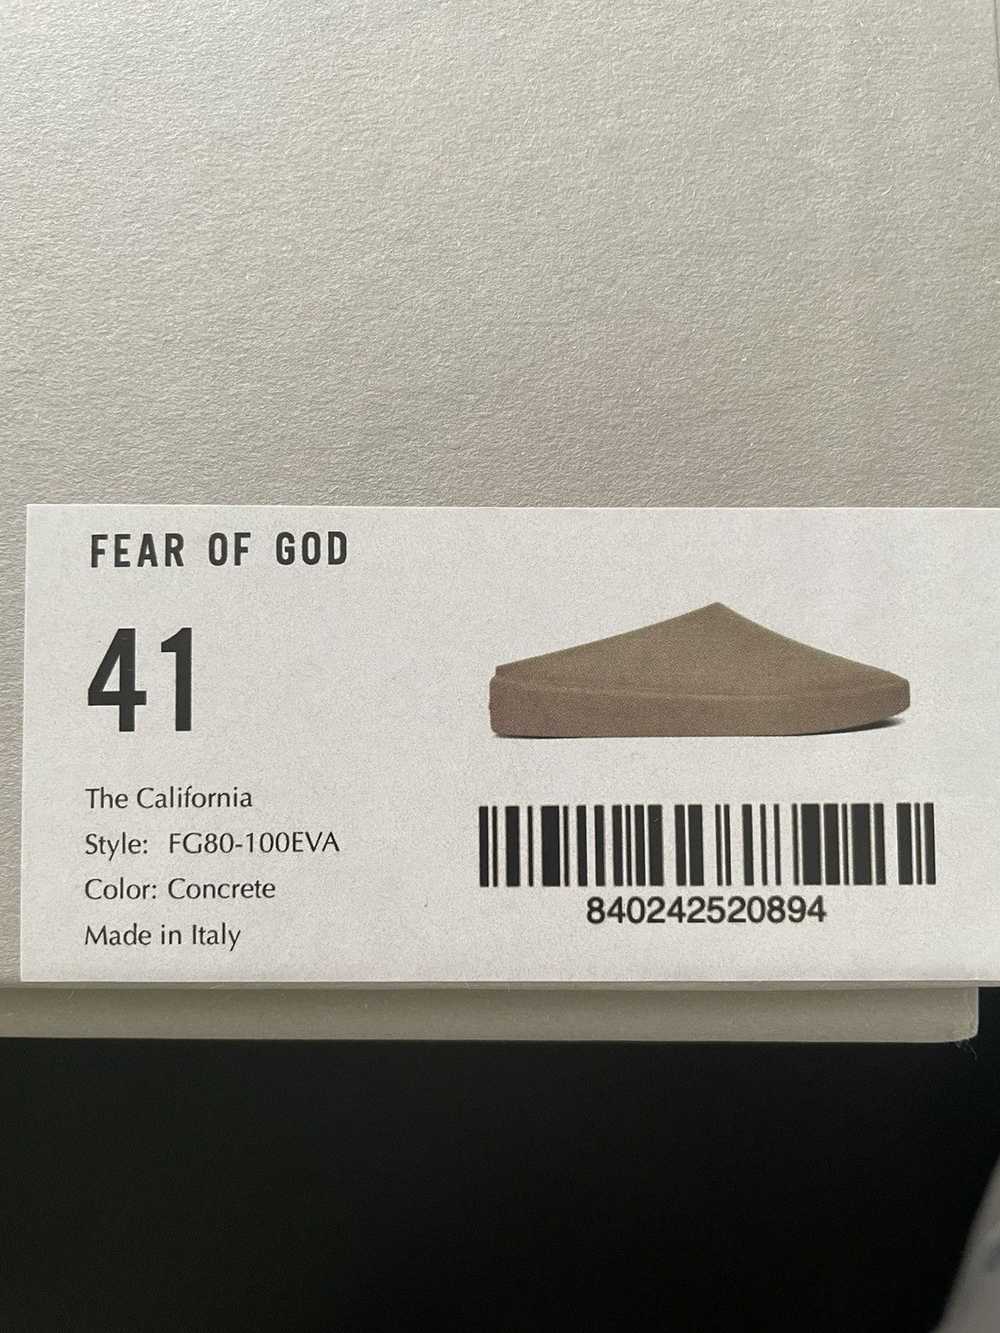 Fear of God Fear of God Concrete California V.1 - image 2